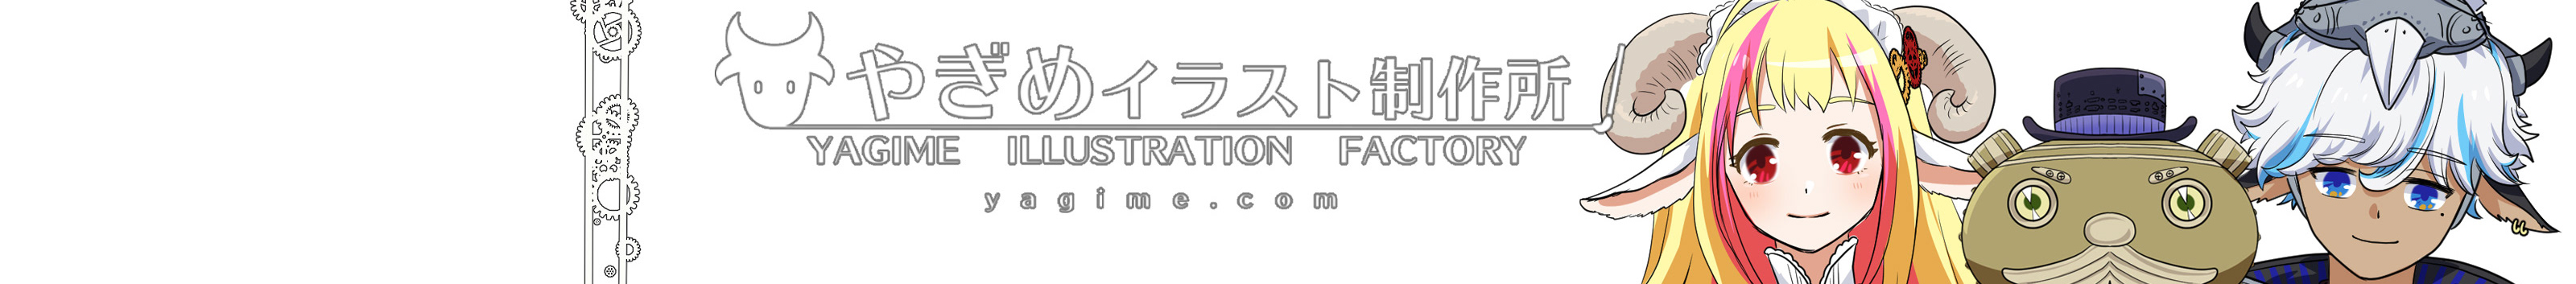 Megumi Yagi's profile banner